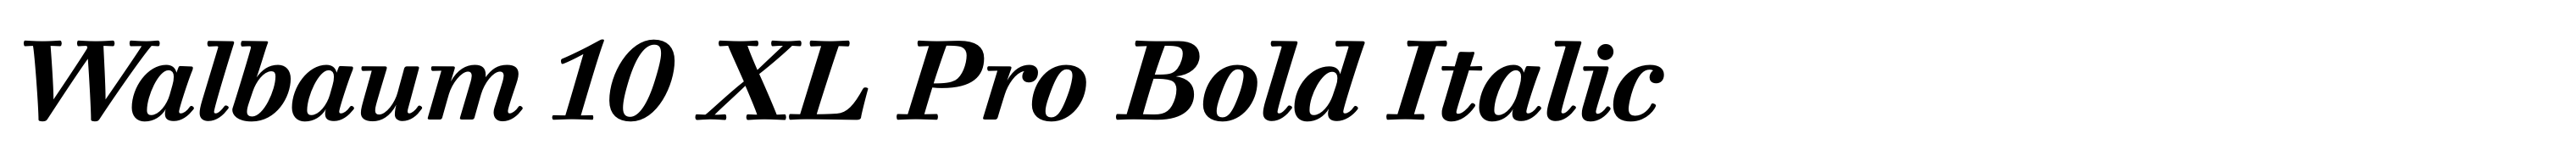 Walbaum 10 XL Pro Bold Italic